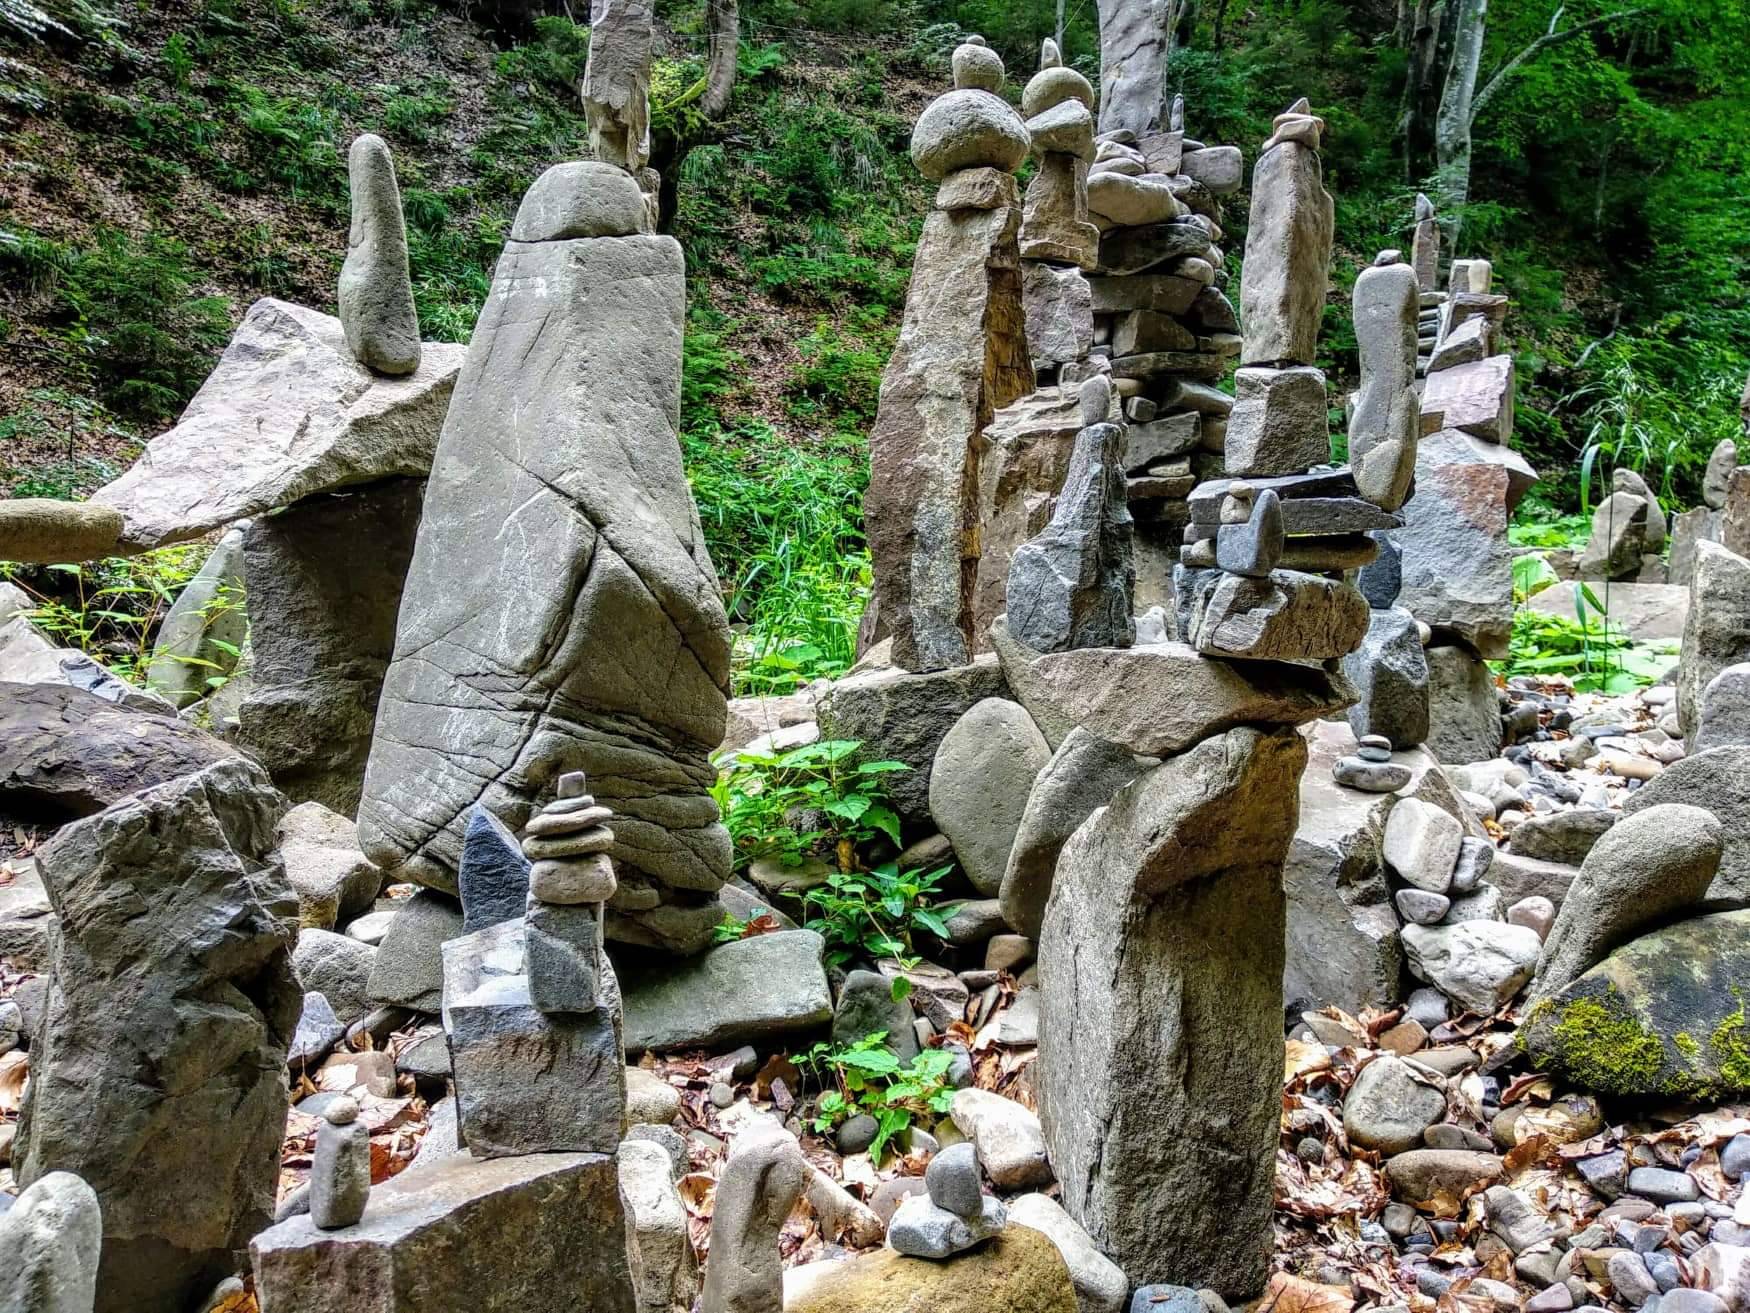 Stone inhabitants of the stone town